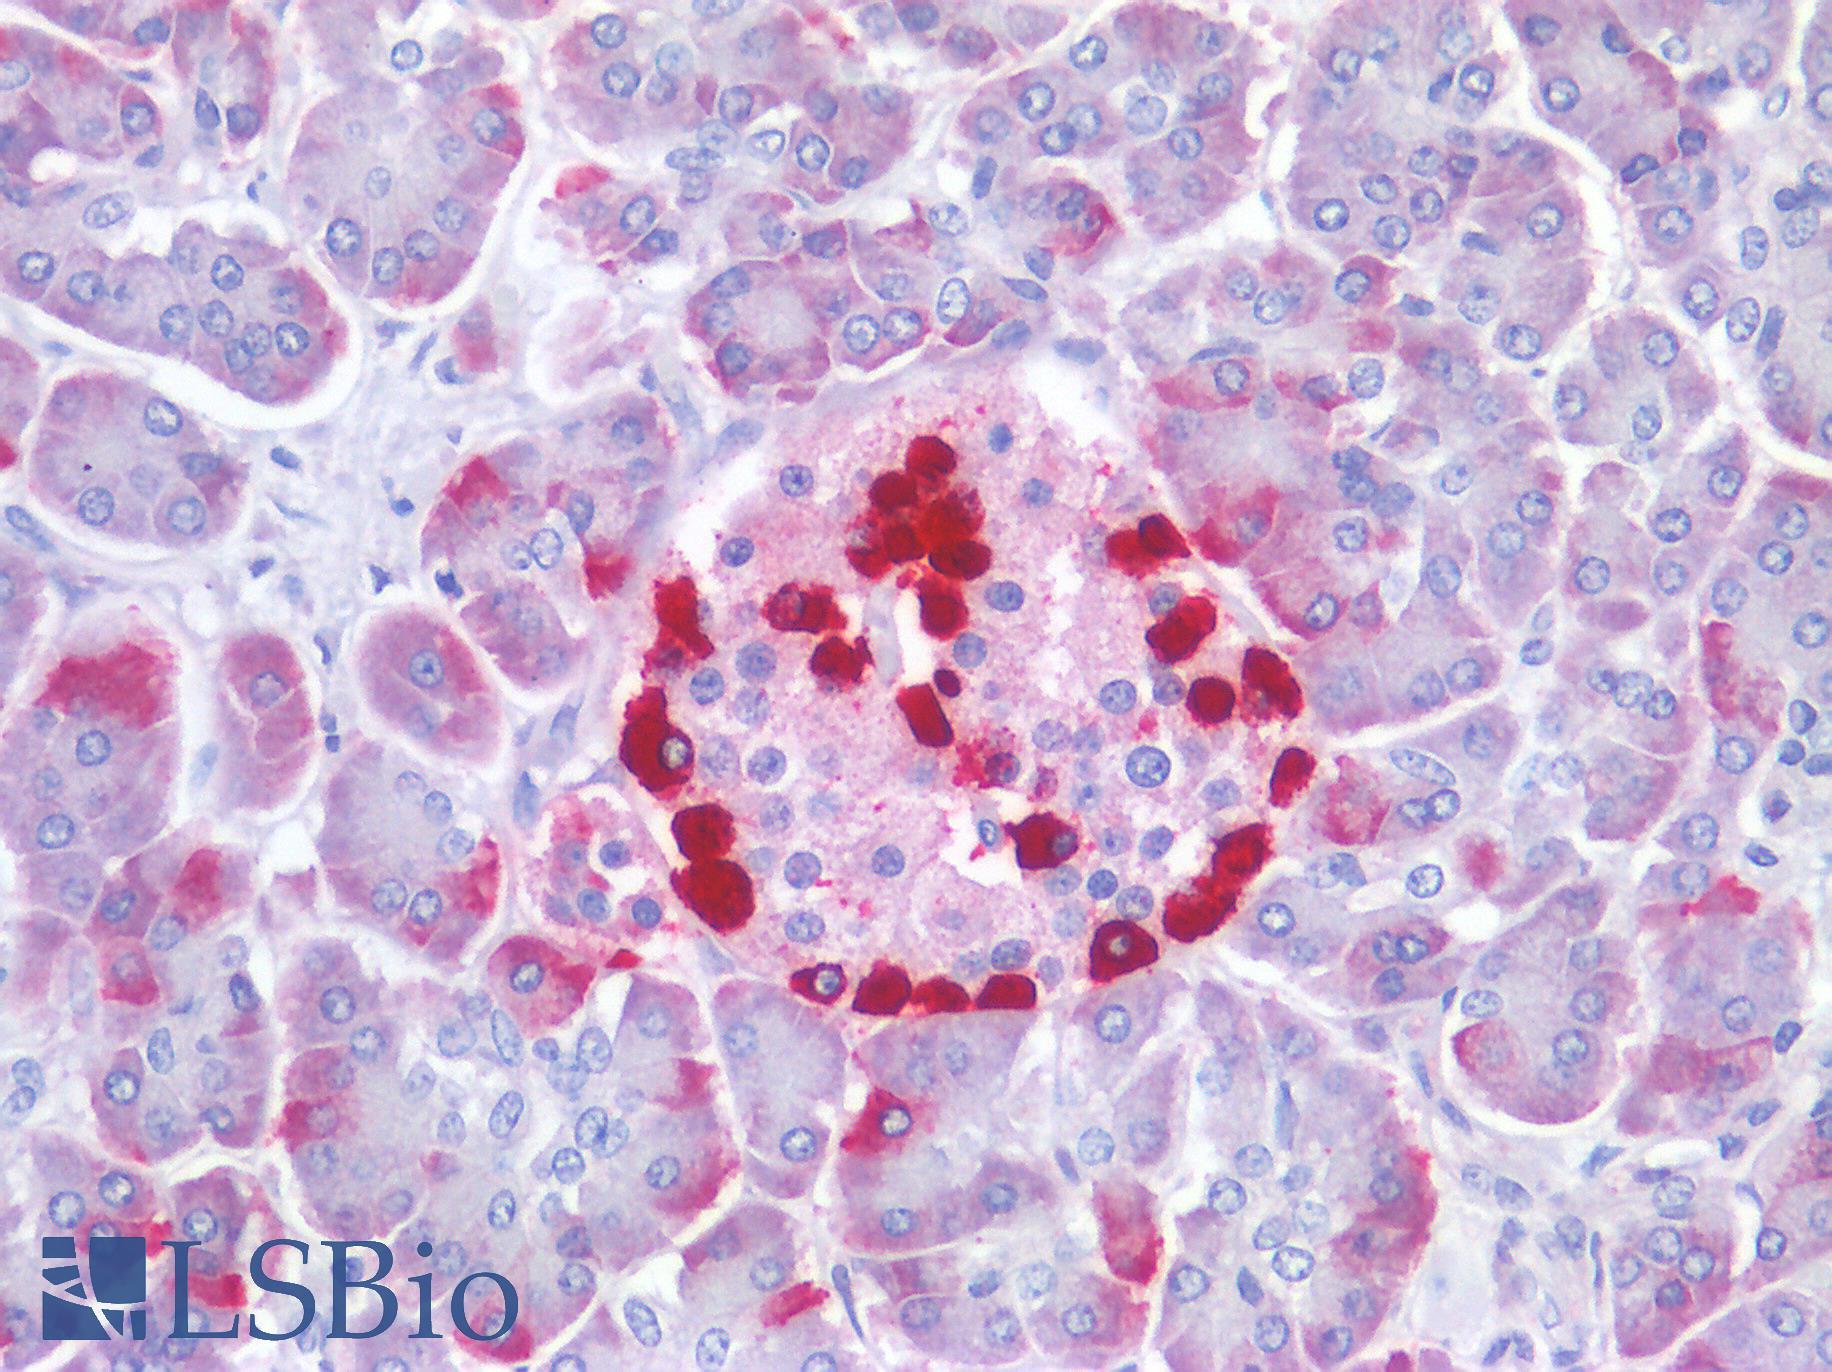 GCG / Glucagon Antibody - Human Pancreas,  Islets of Langerhans: Formalin-Fixed, Paraffin-Embedded (FFPE)